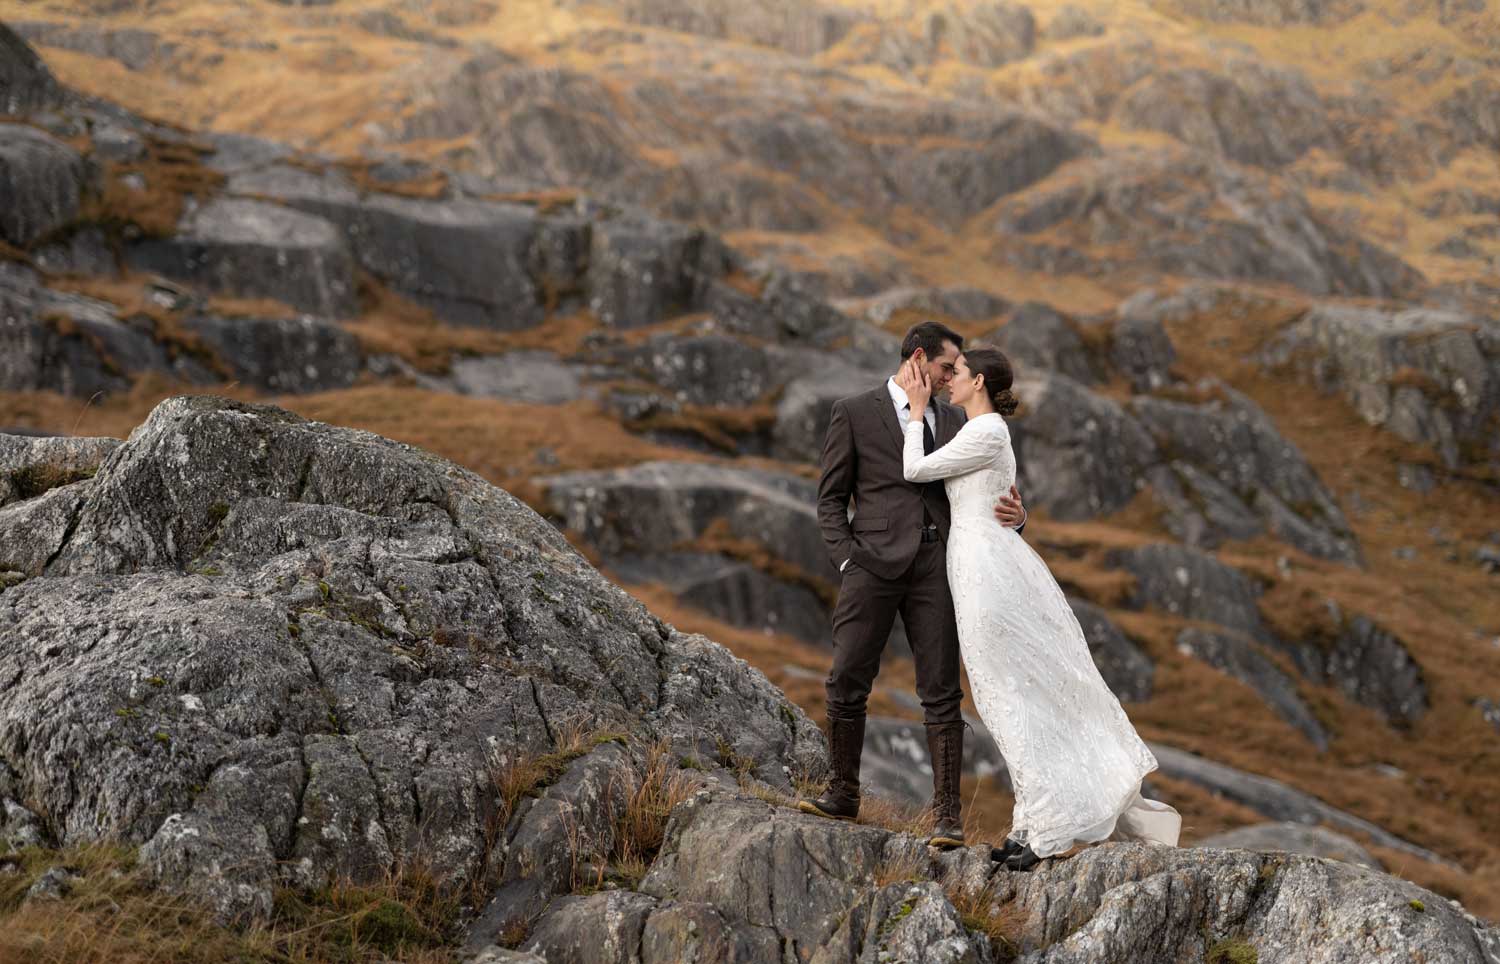 Beautiful weddings in a wonderful Scottish setting